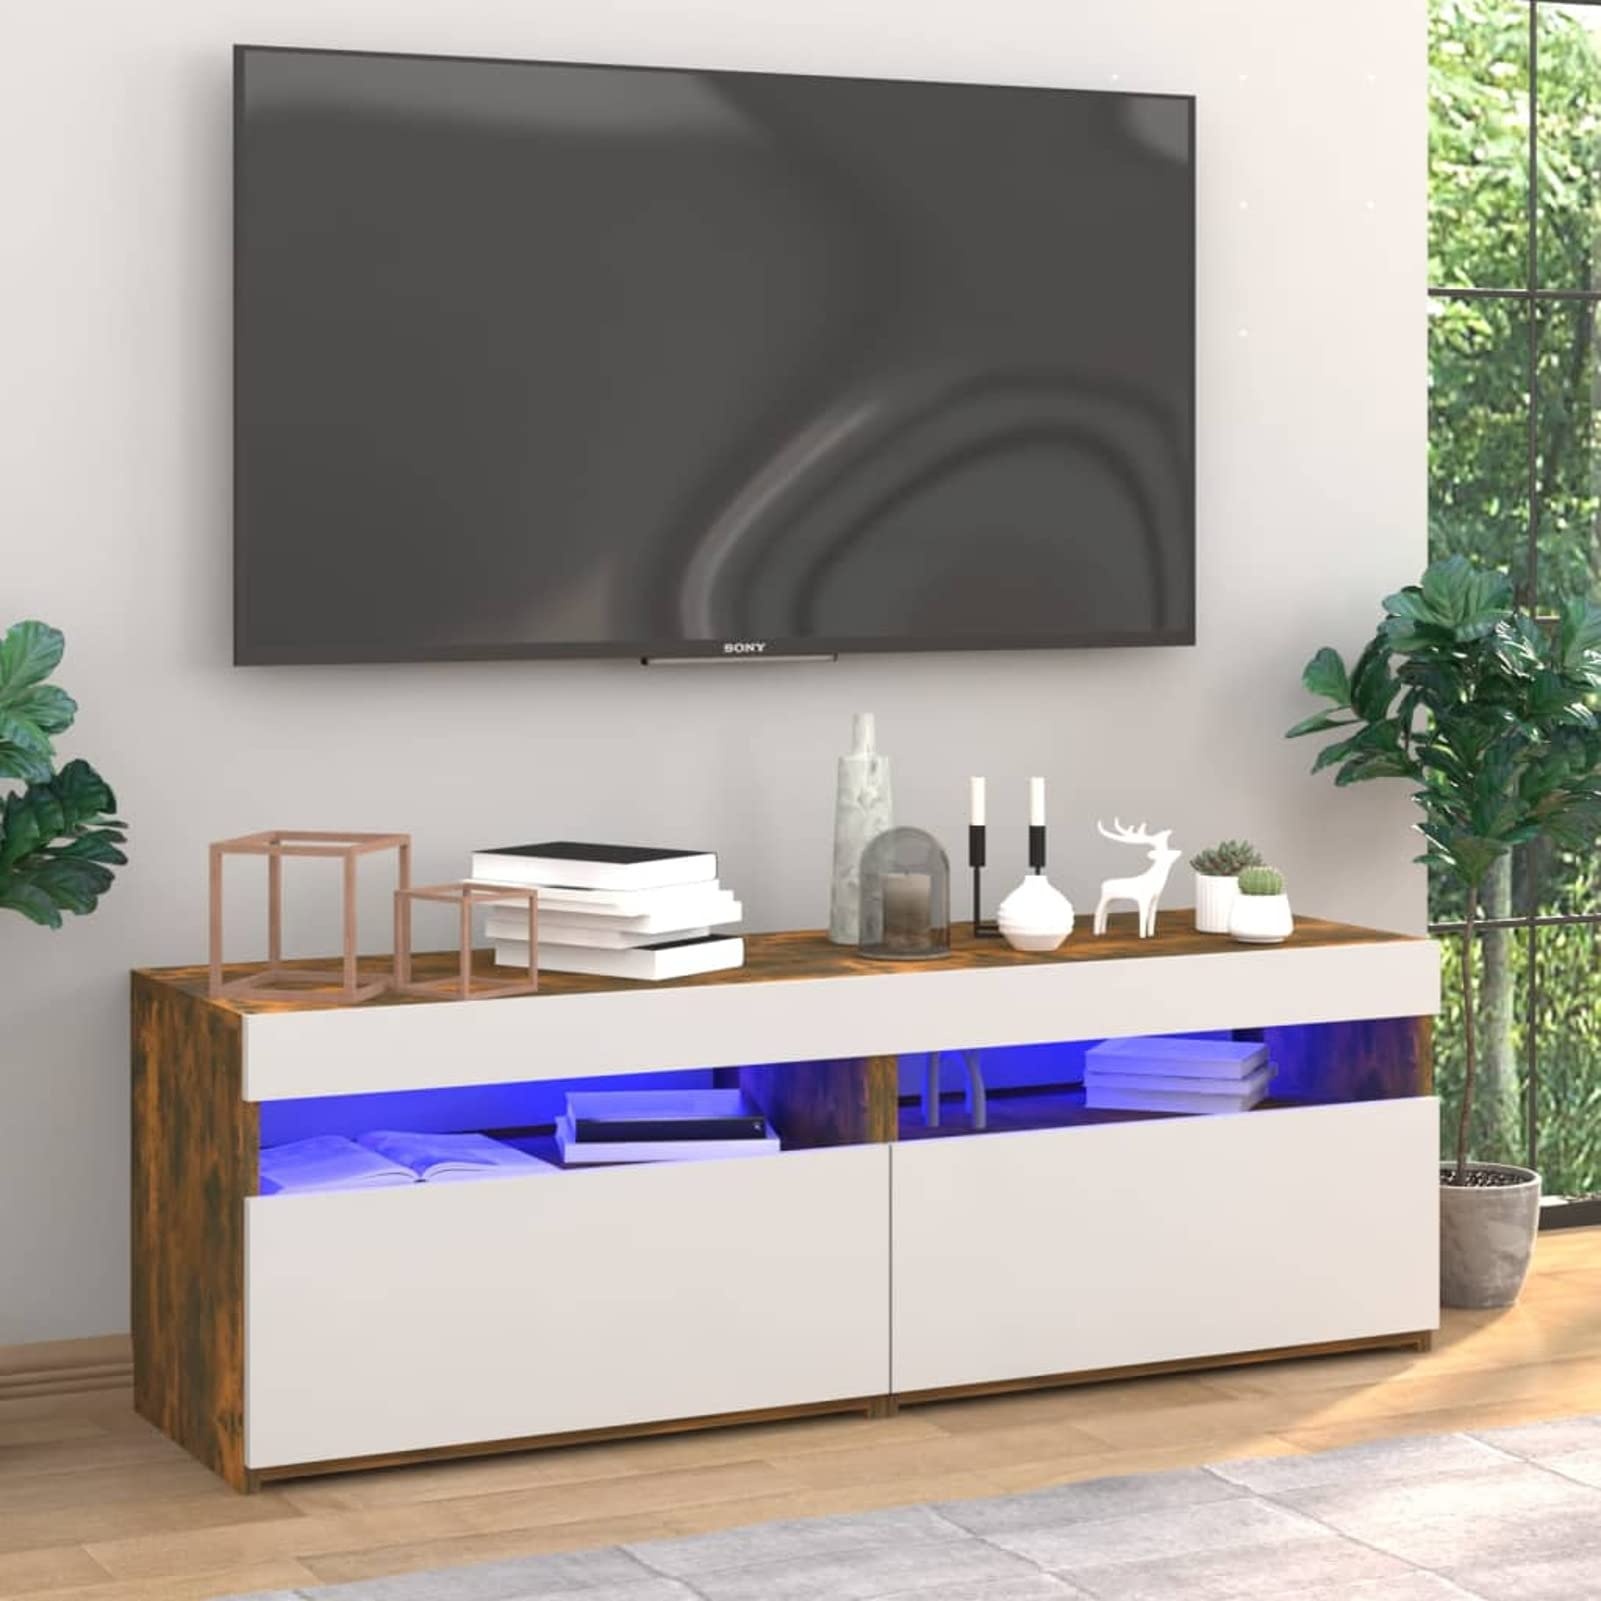 SECOLI TV Schrank LED 120 cm TV-Bank TV Lowboard mit LED-Beleuchtung Fernsehtisch Räuchereiche TV Board LED TV Schrank Fernsehschrank 120 x 35 x 40 cm